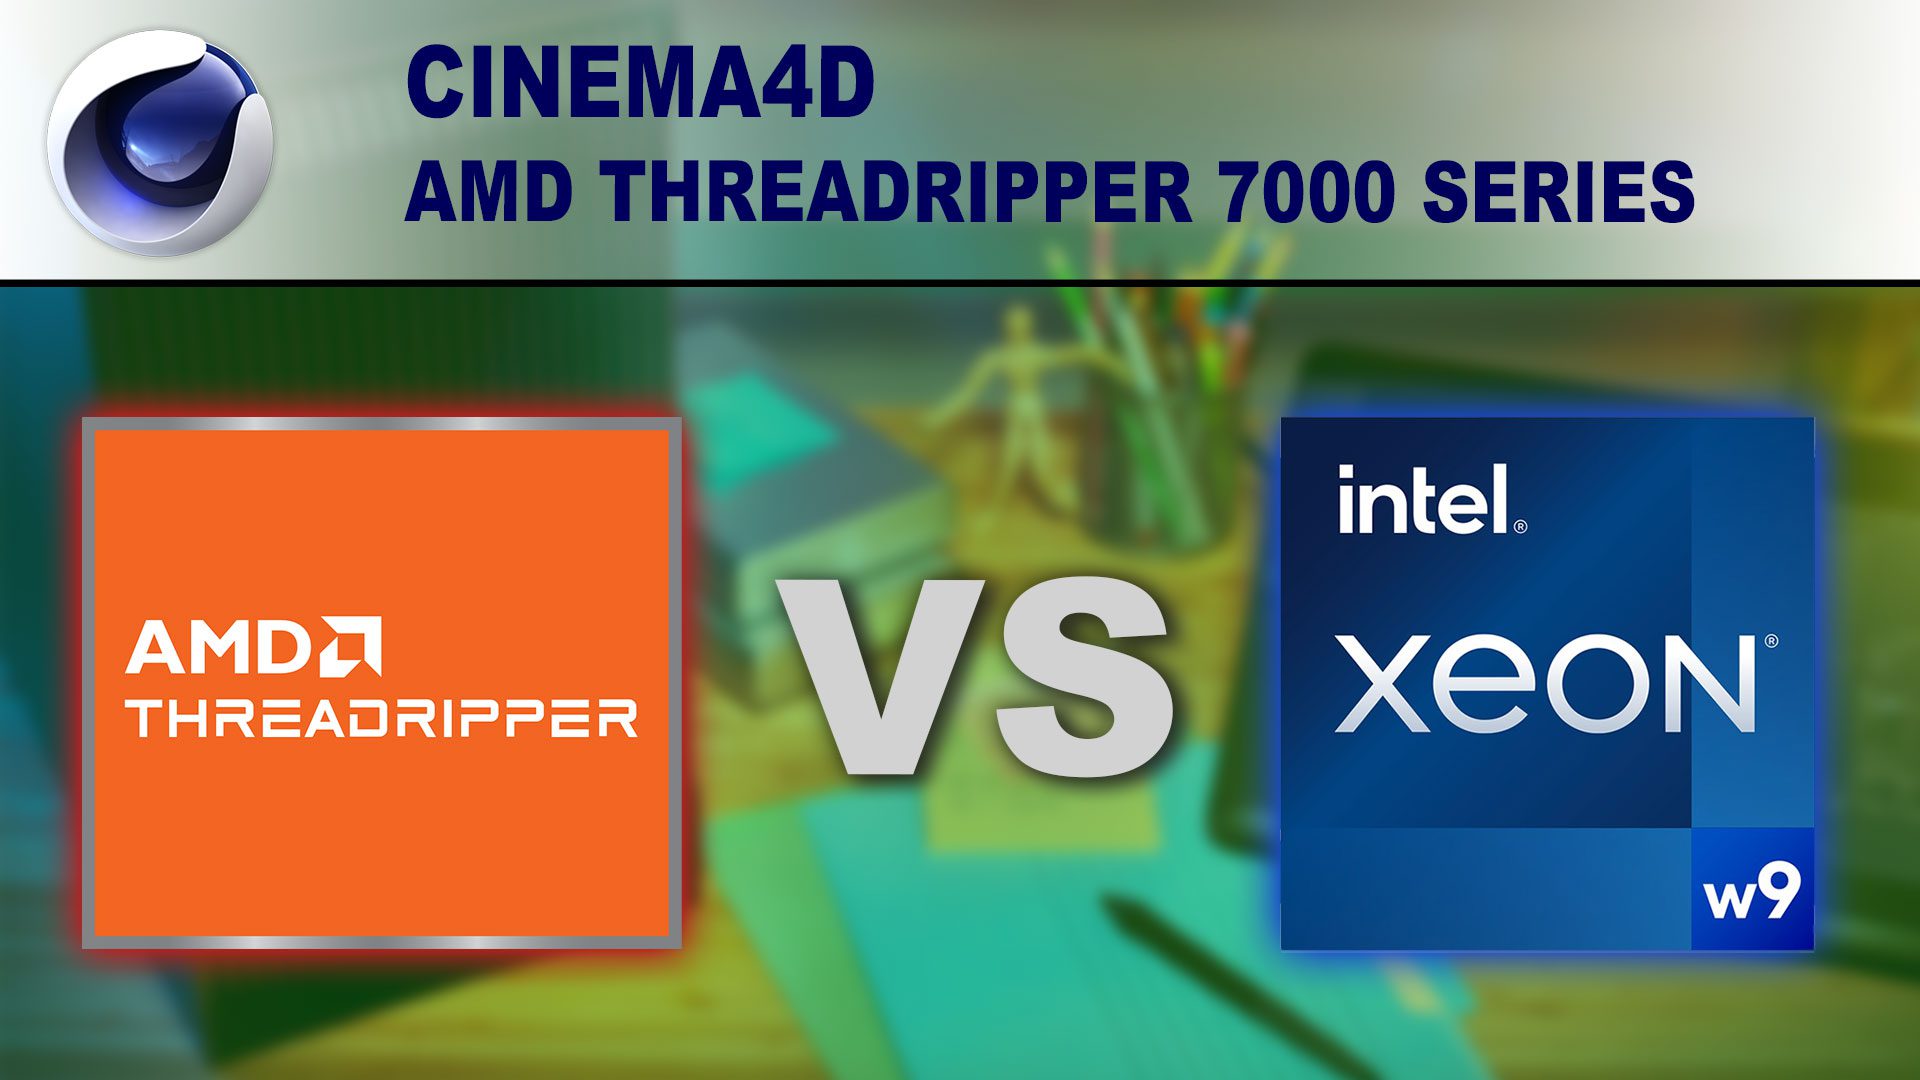 Decorative Image: Cinema 4D - AMD Threadripper vs Intel Xeon